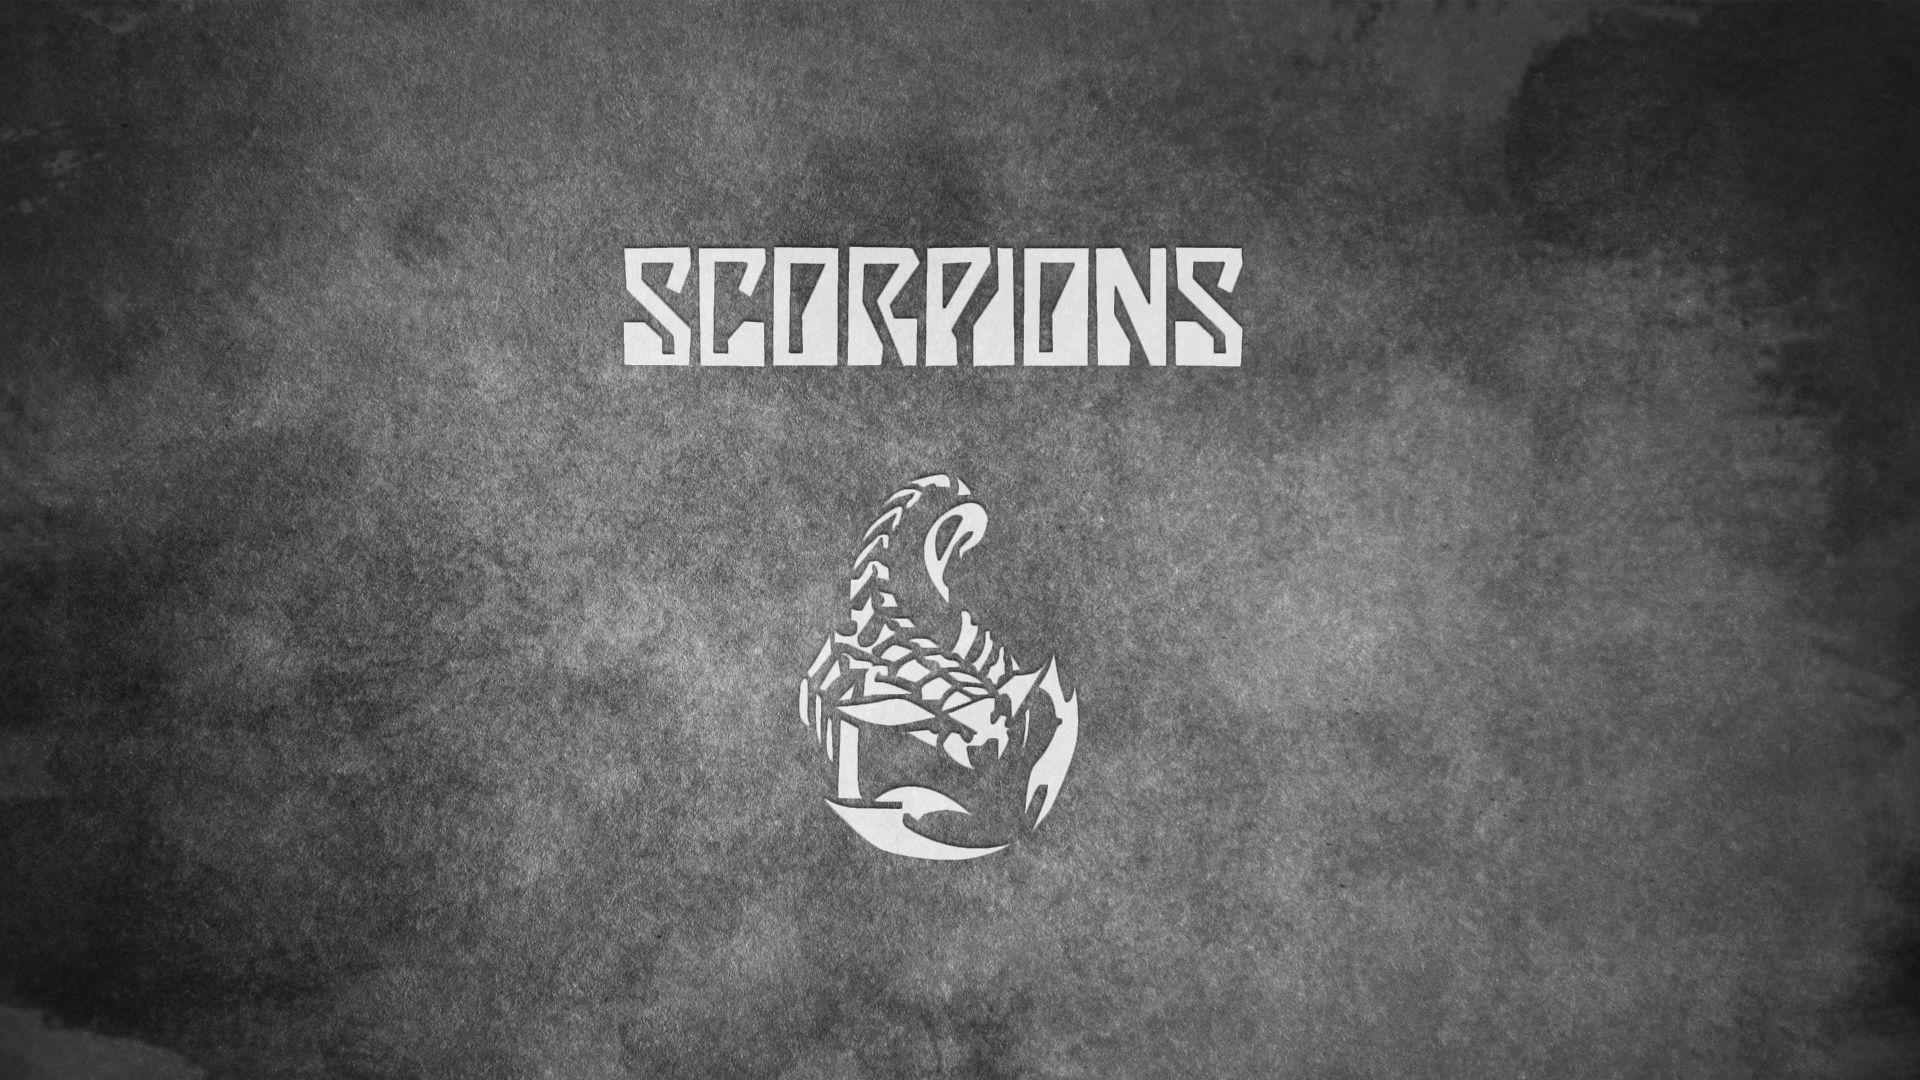 Full HD Scorpions logo wallpaper 2125. Scorpions wallpaper